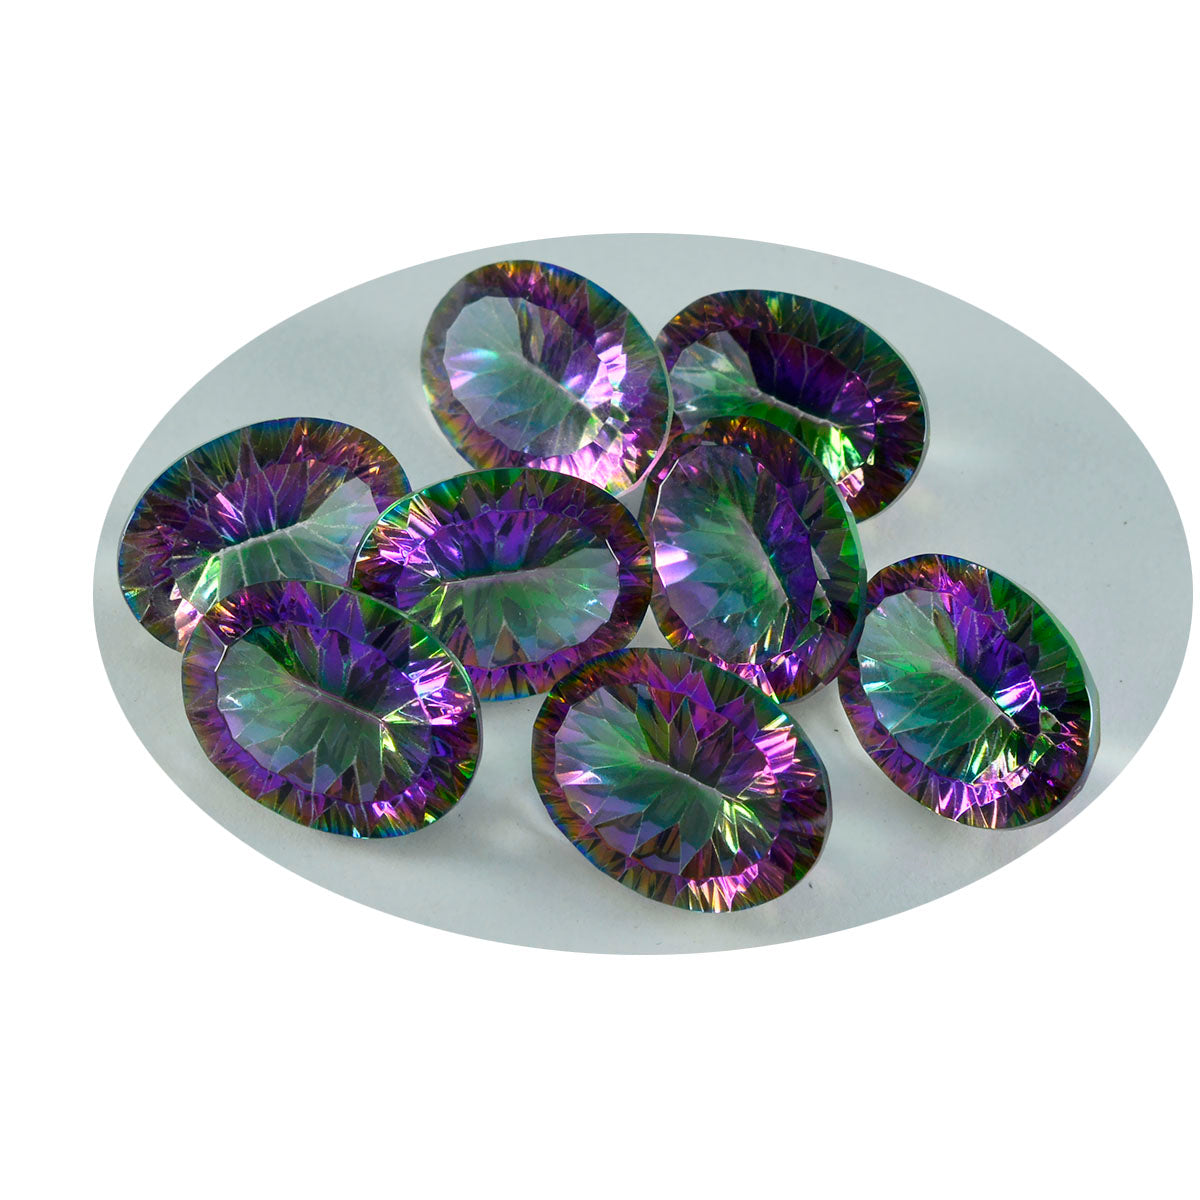 Riyogems 1PC Multi Color Mystic Quartz Faceted 12x16 mm Oval Shape nice-looking Quality Loose Gems